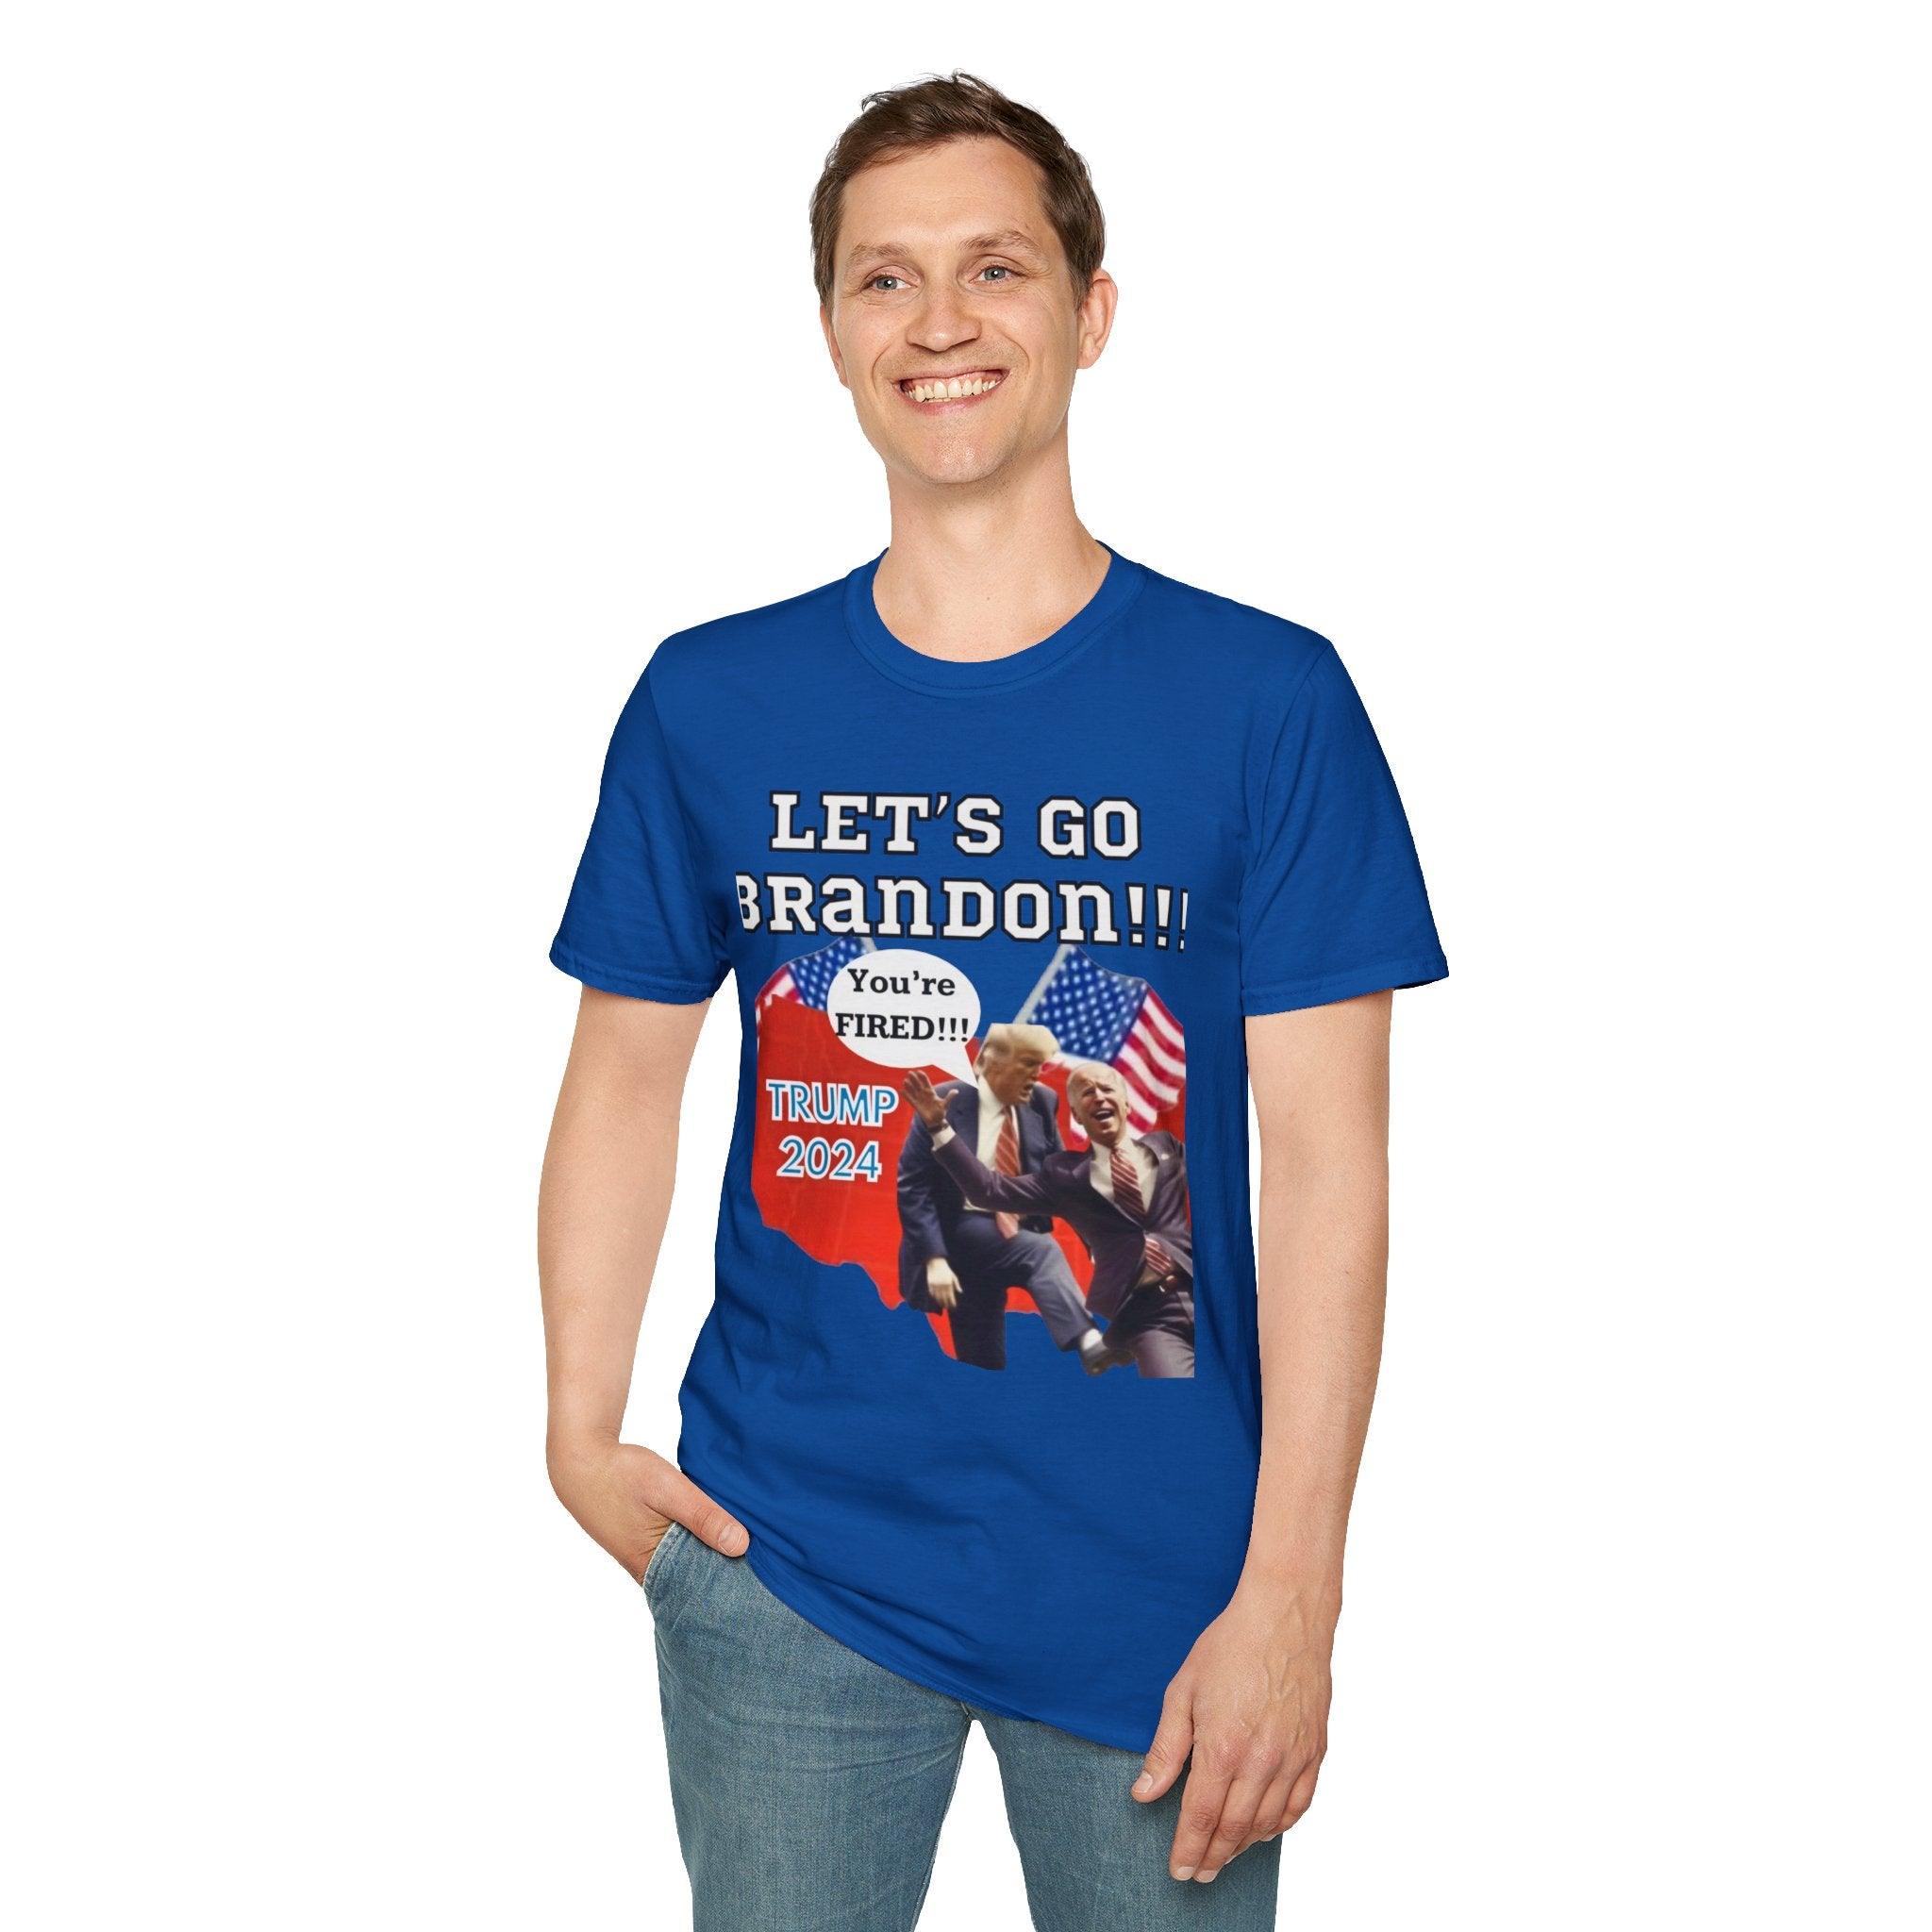 Trump 2024 - let’s go Brandon T-shirt - Epic Shirts 403